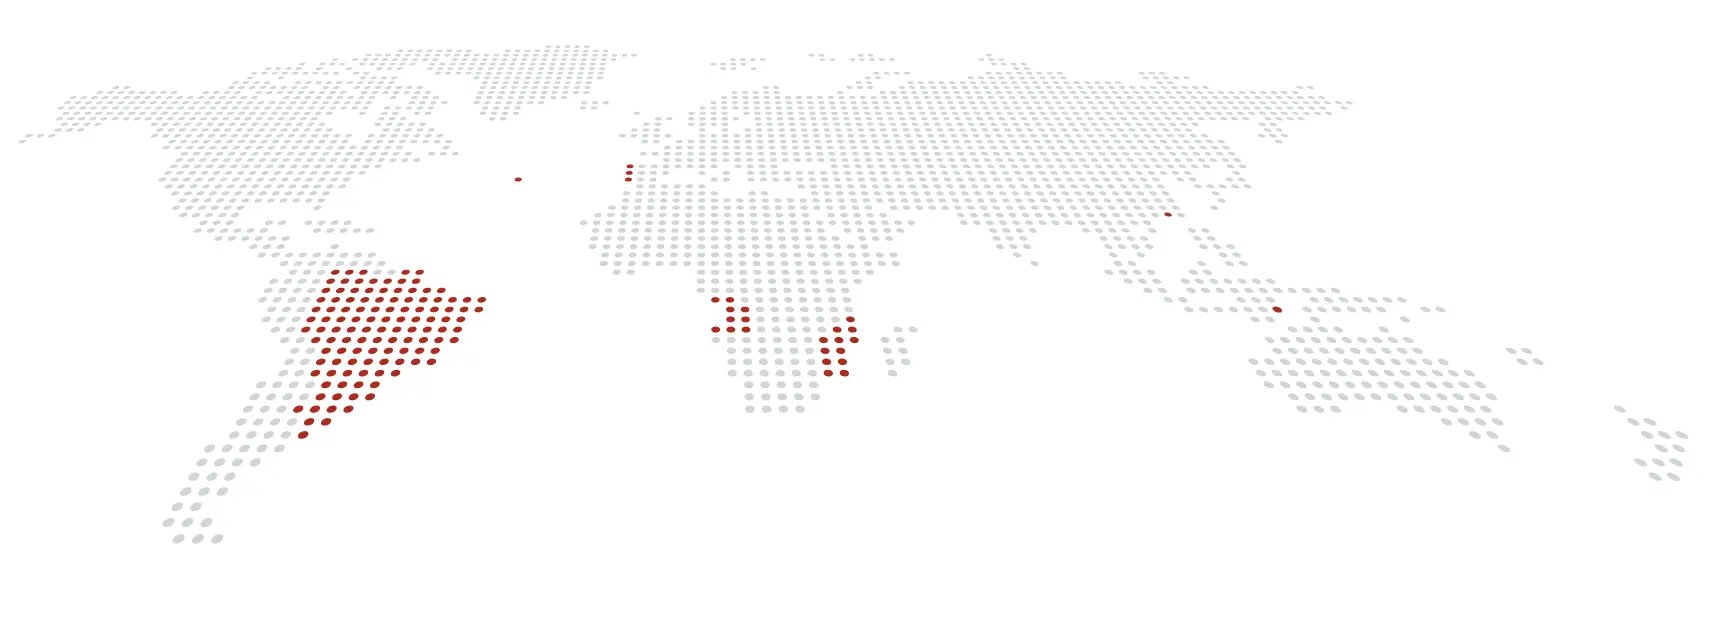 Mapa d'on es parla portuguès